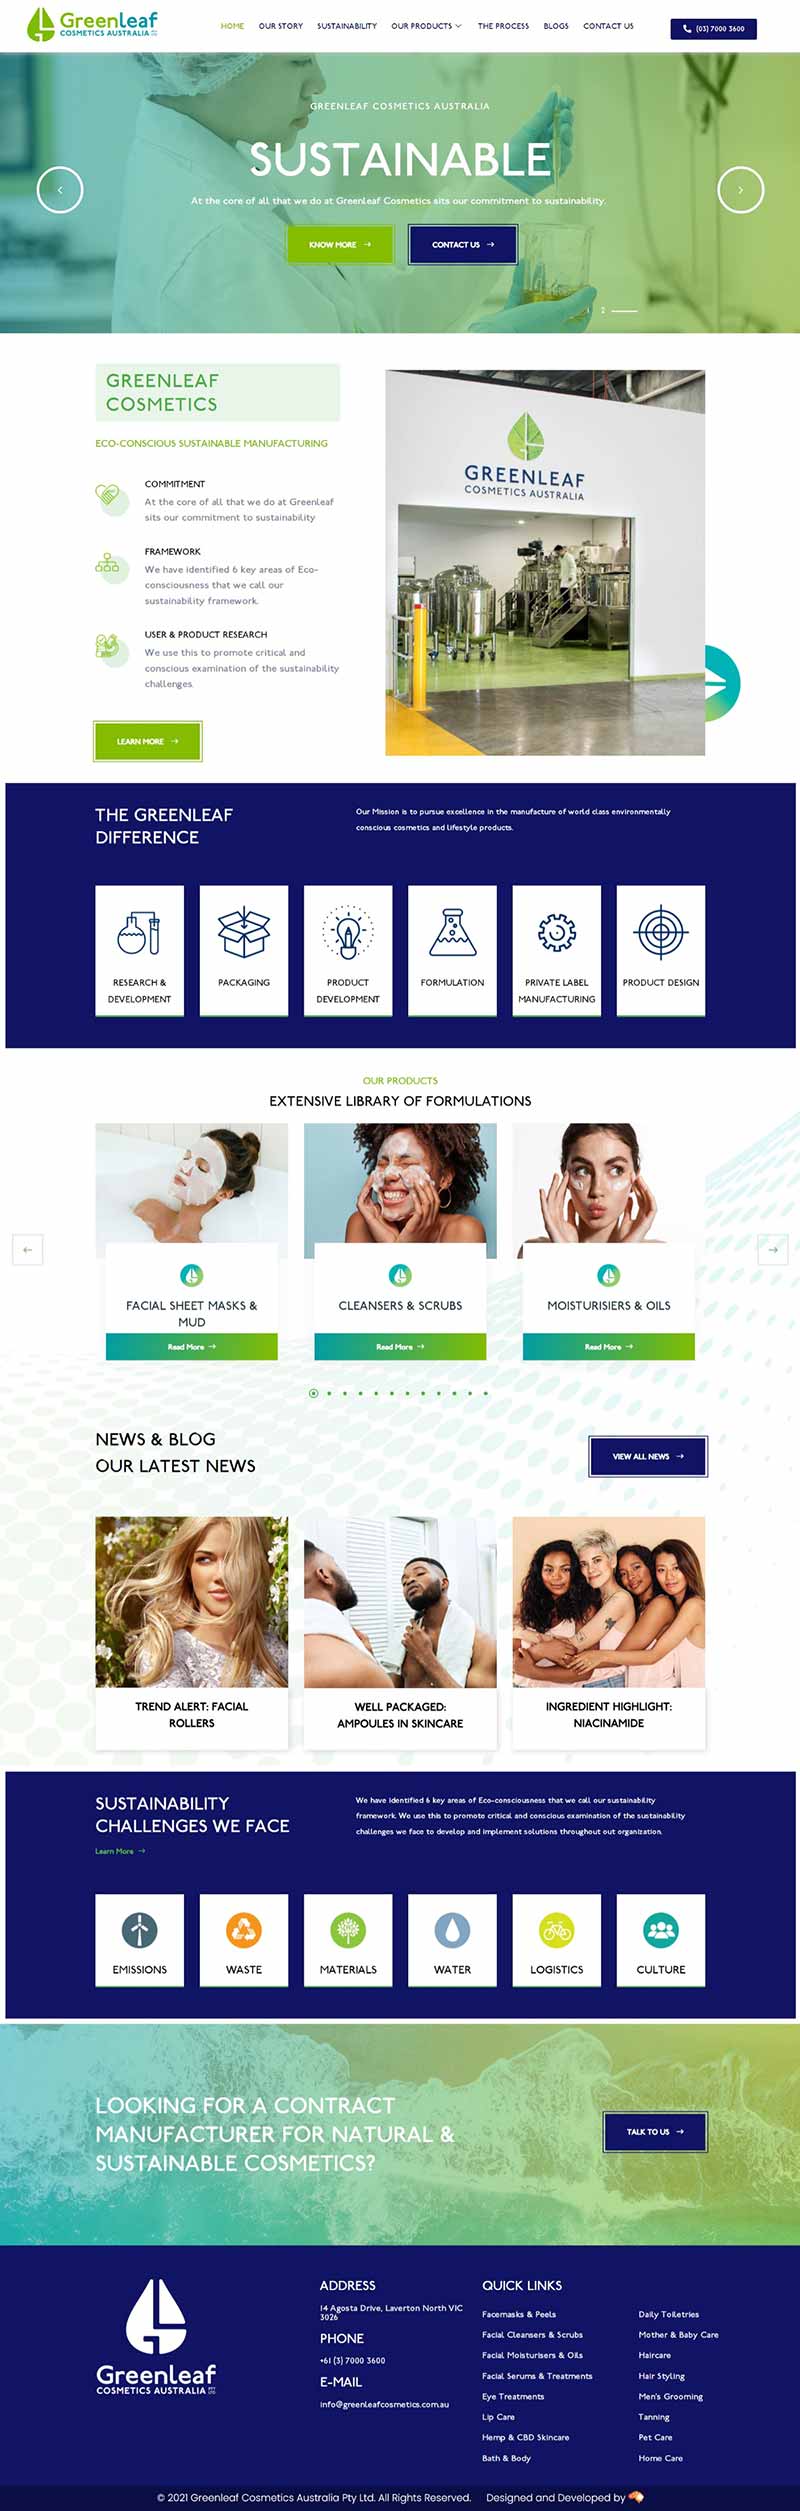 Greenleaf Cosmetics homepage